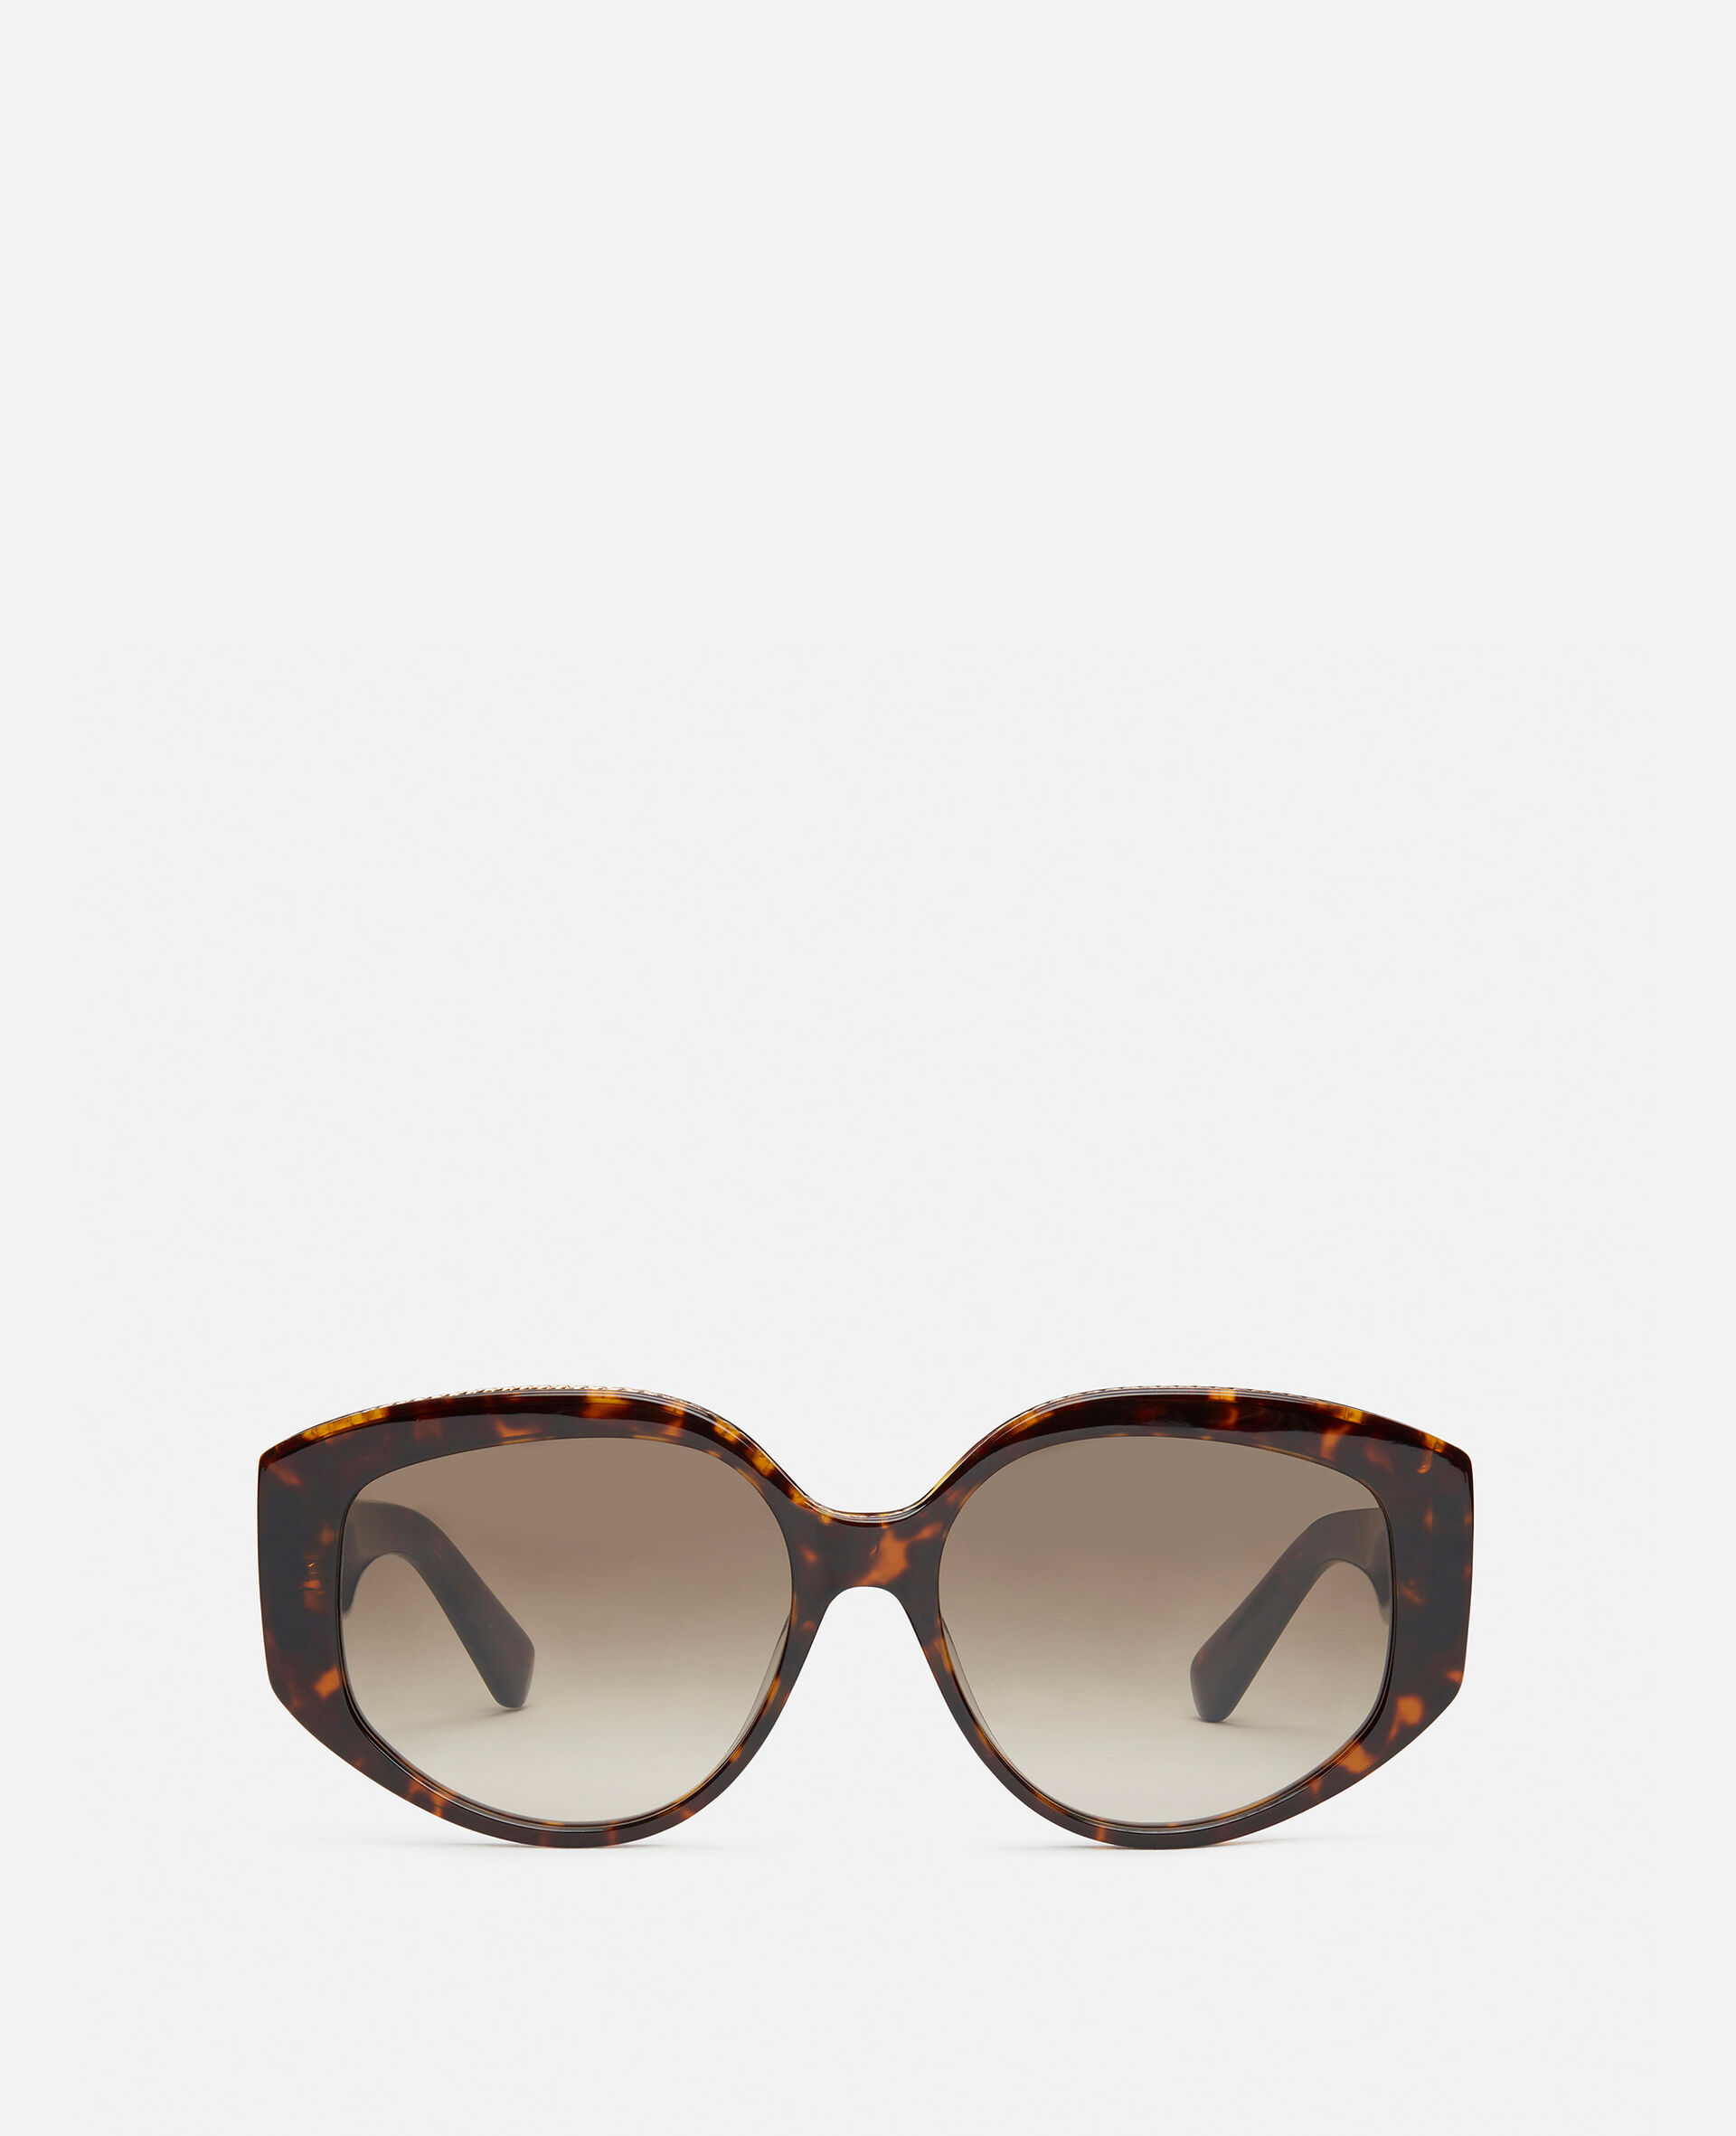 Oval Sunglasses-Black-large image number 0